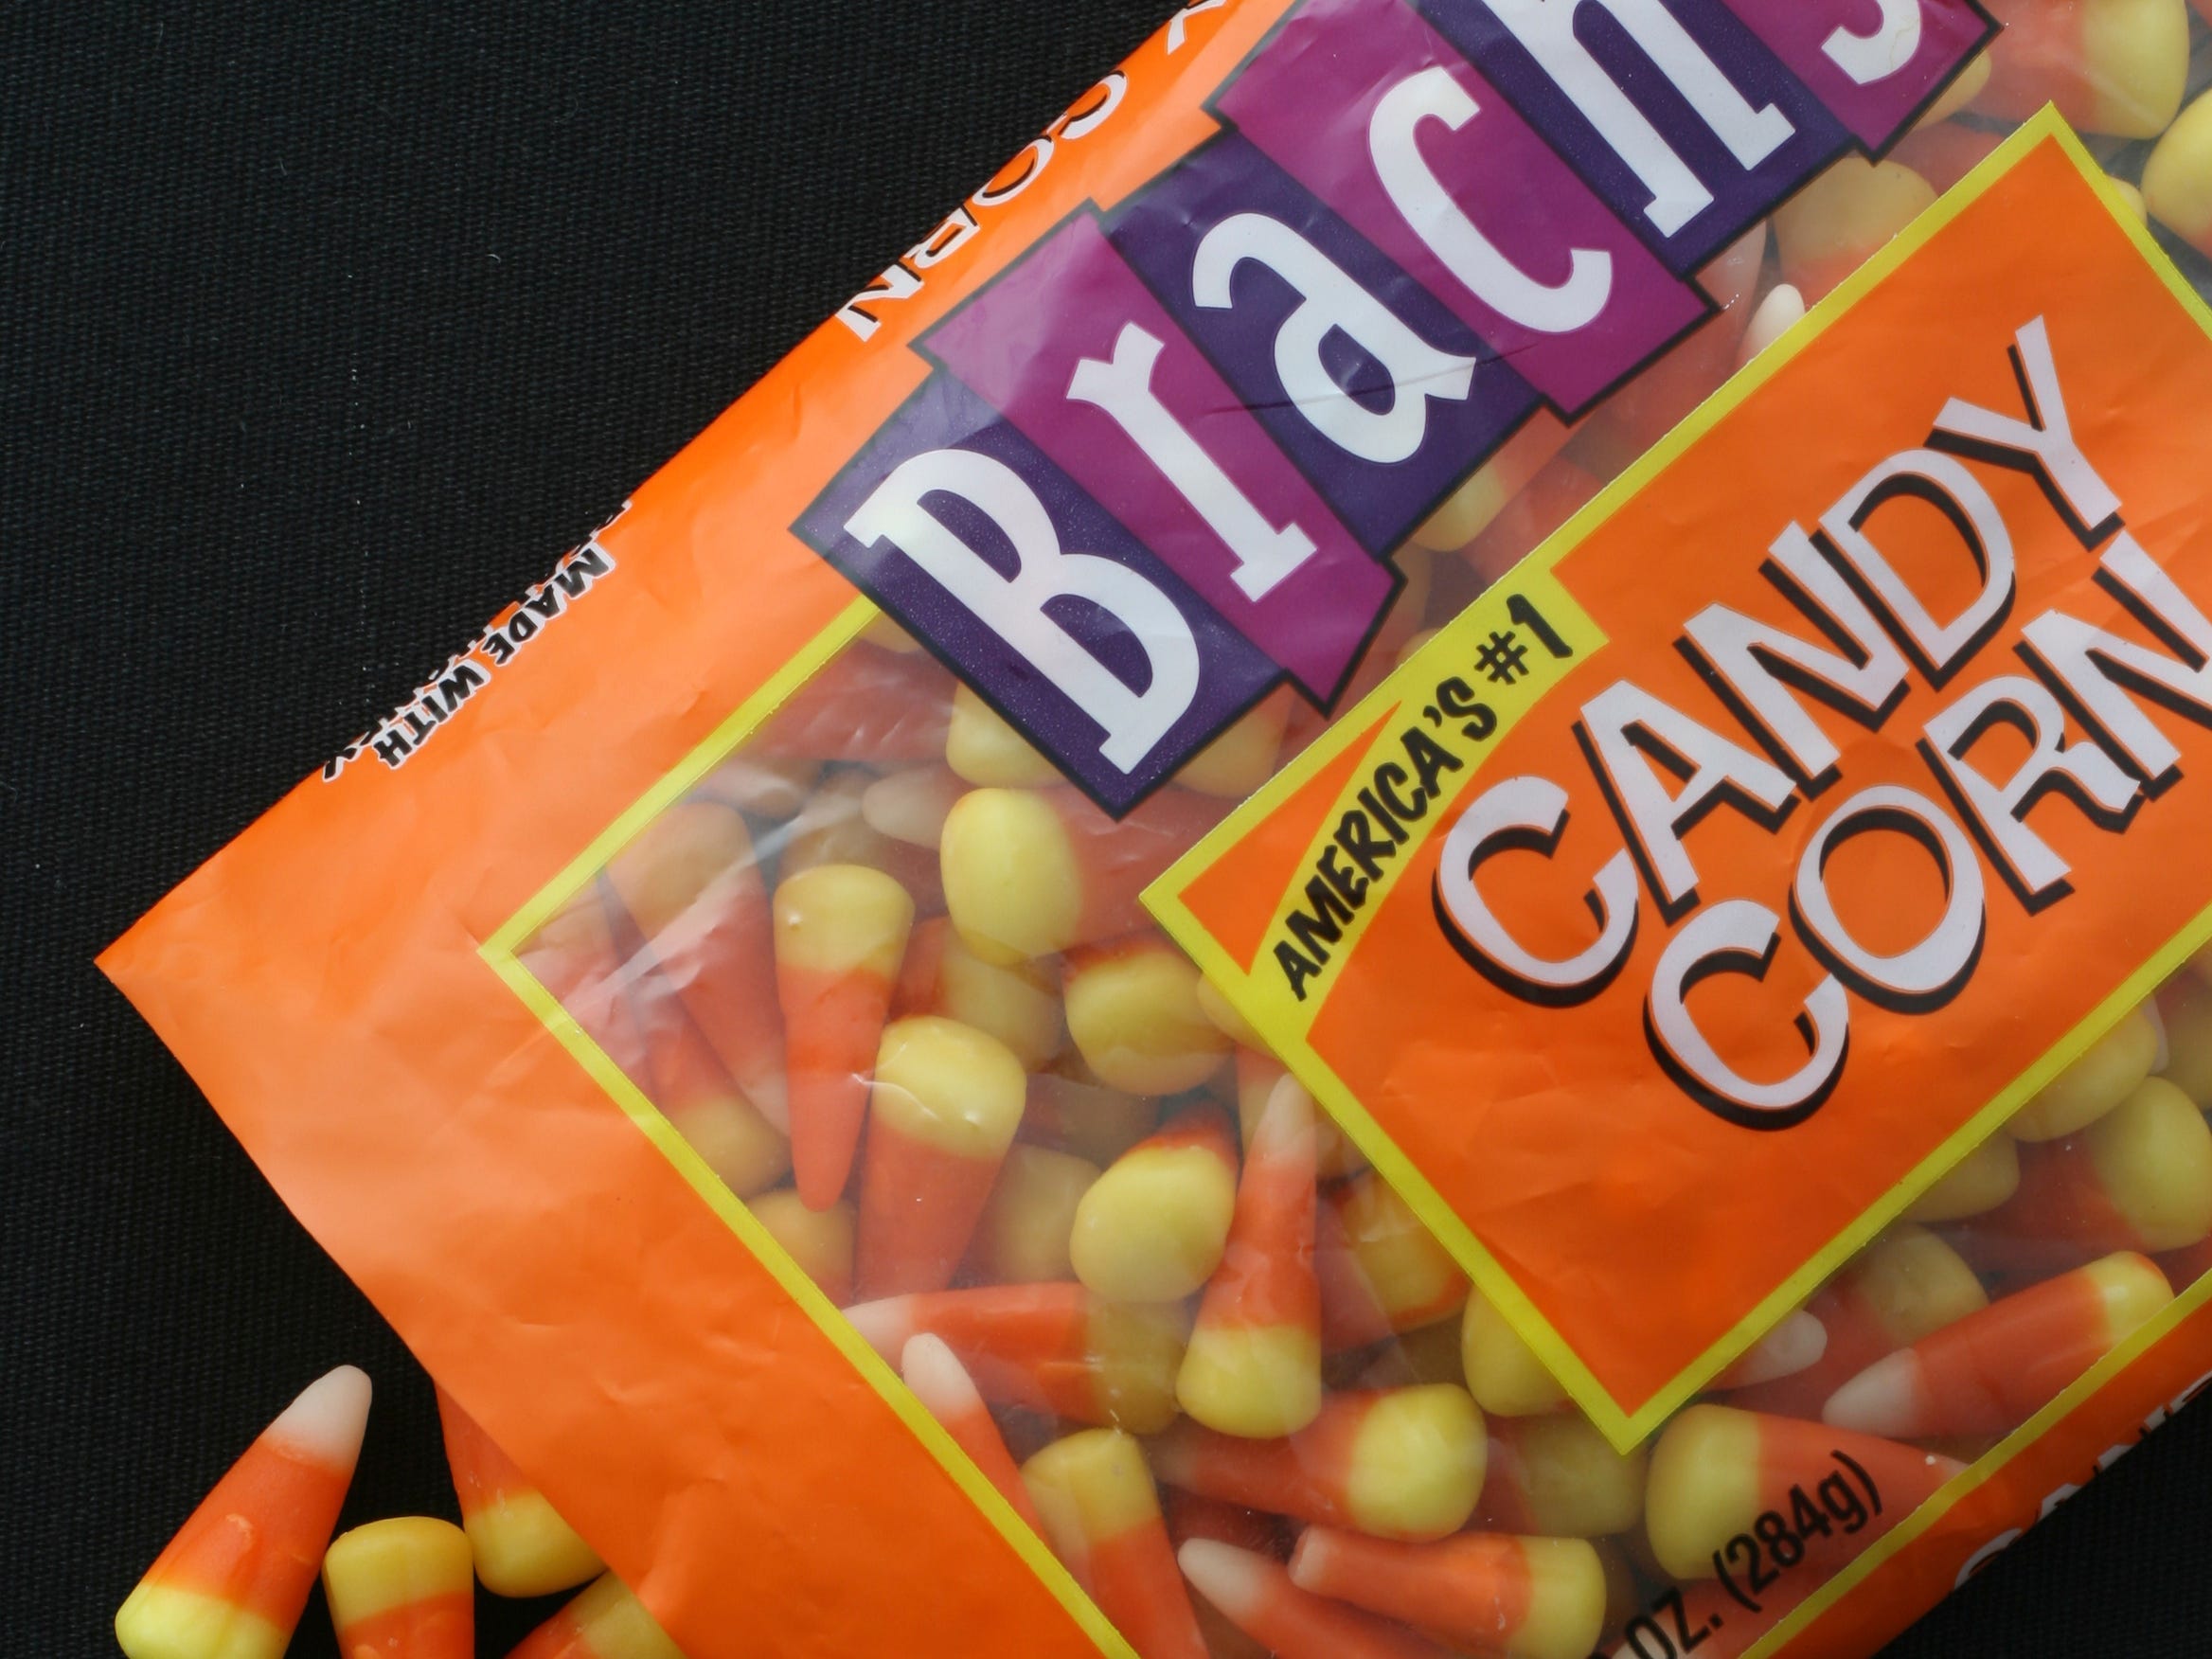 An opened bag of Brach's candy corn.